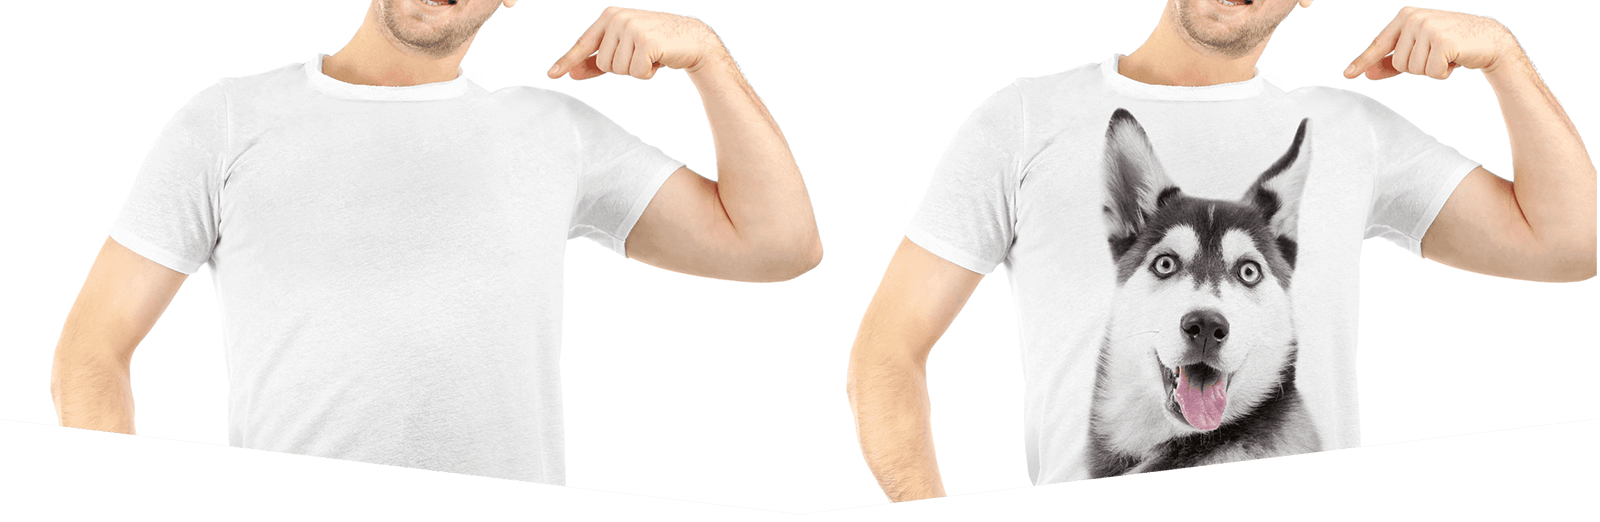 two boys wearing silkscreen printed T-shirts